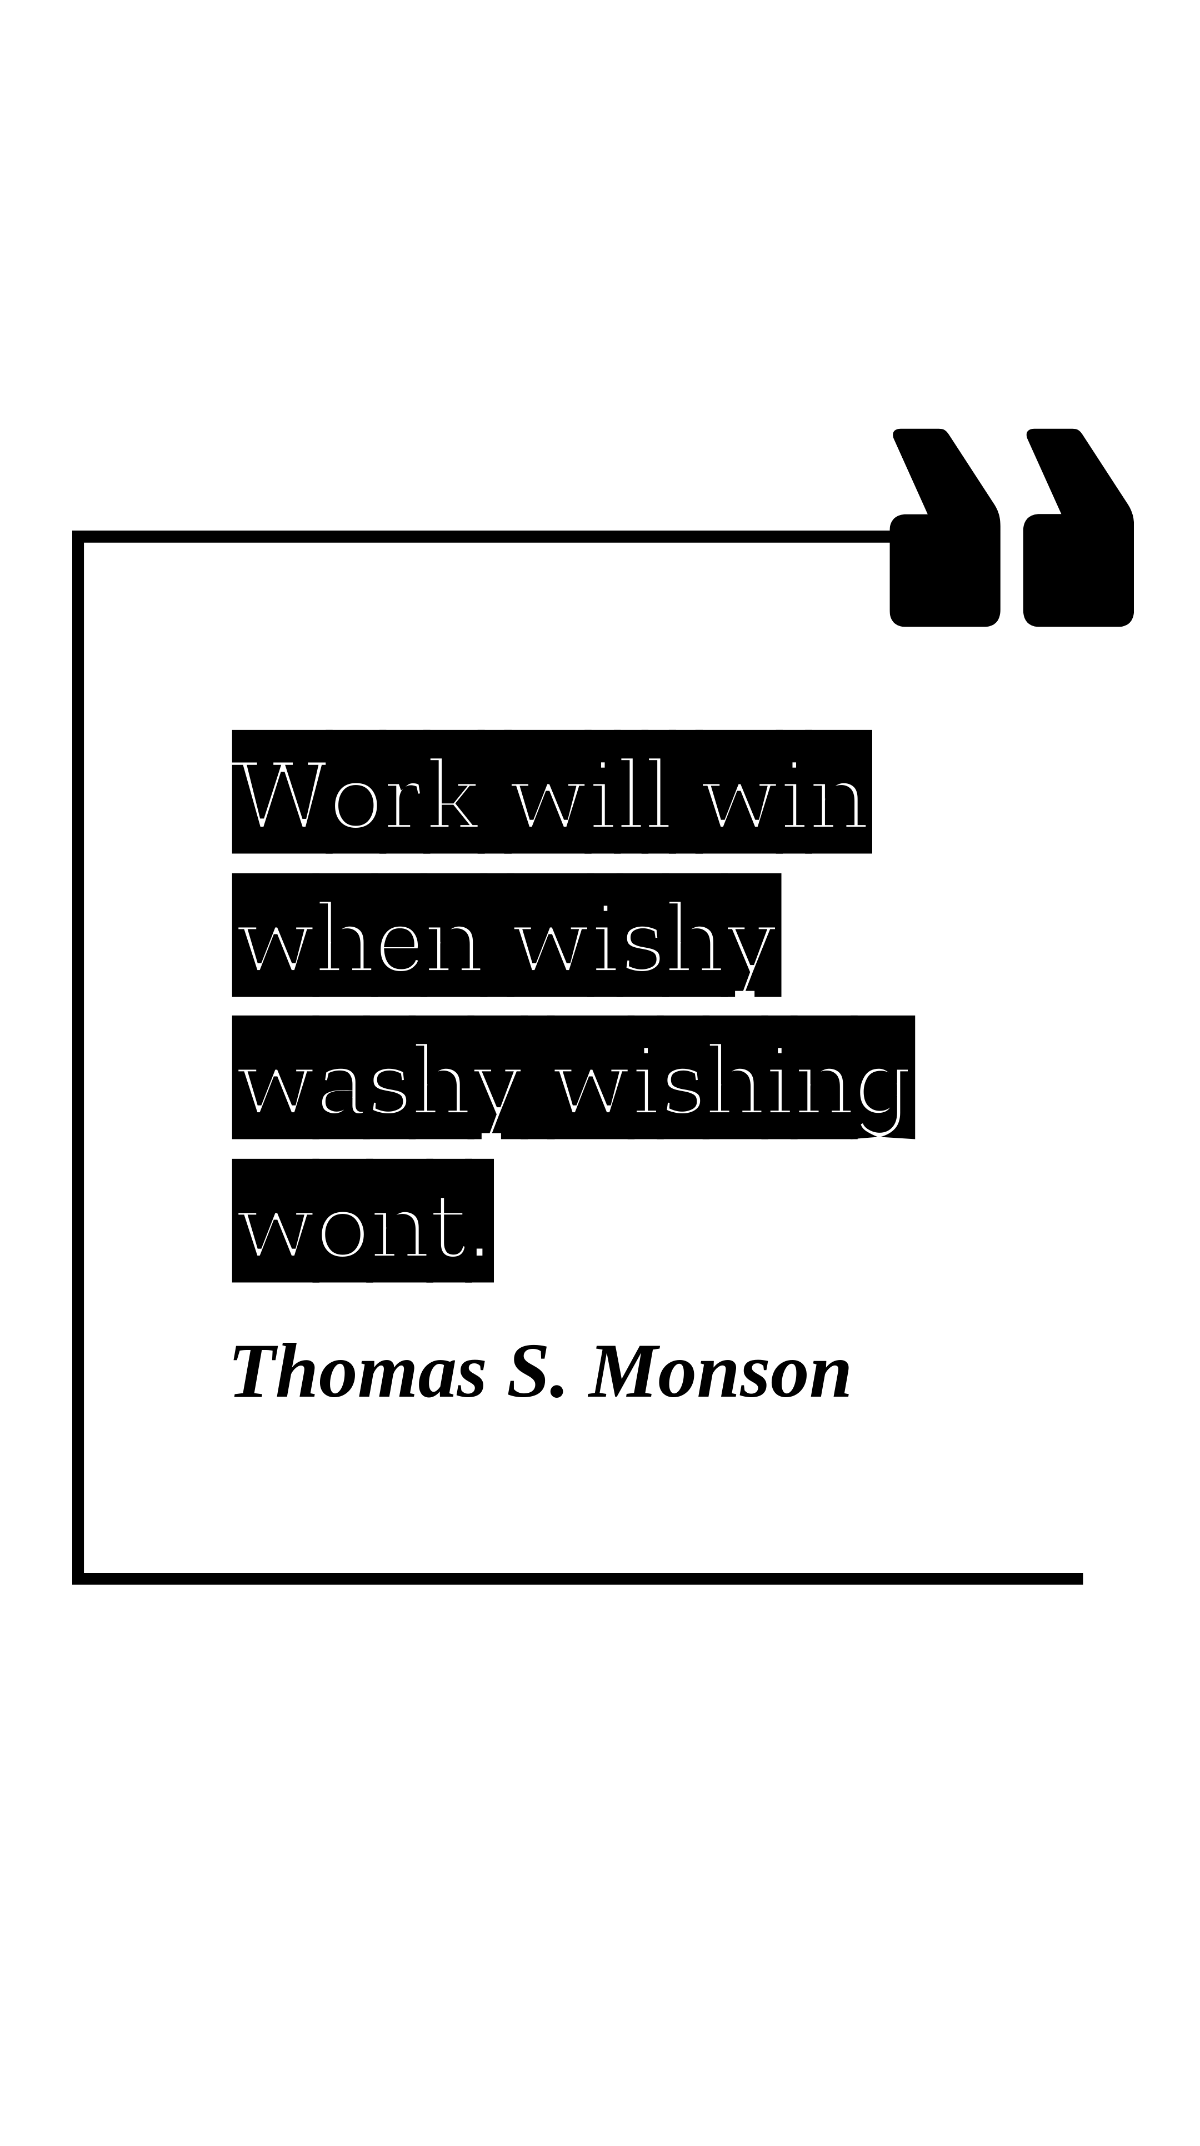 Thomas S. Monson - Work will win when wishy washy wishing wont. Template